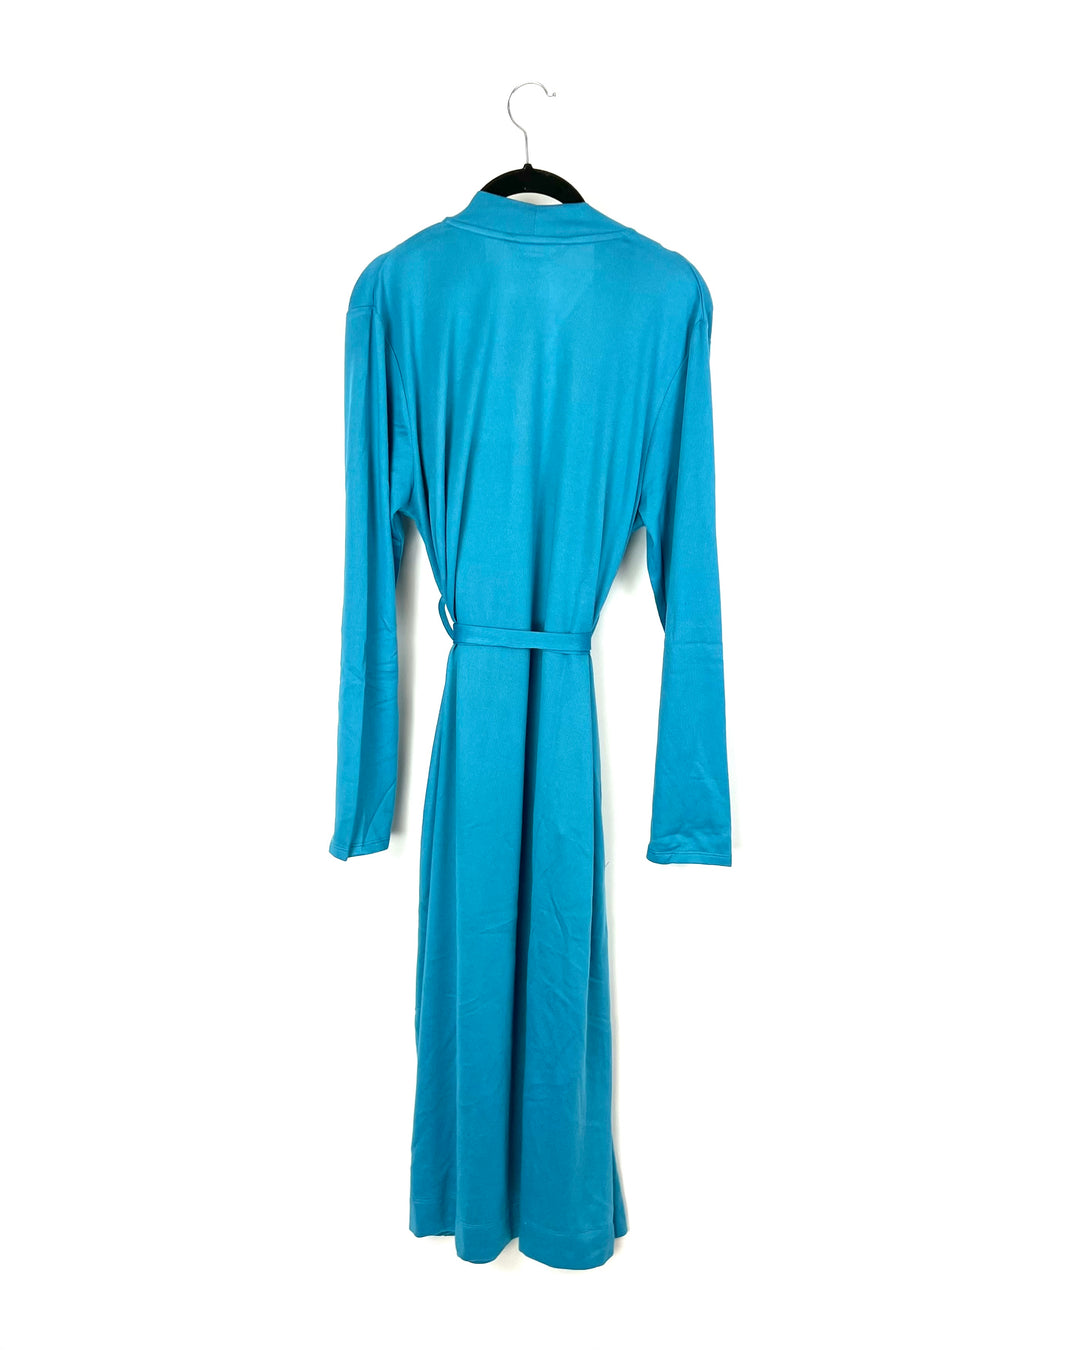 Blue Robe - Small/Medium and Medium/Large